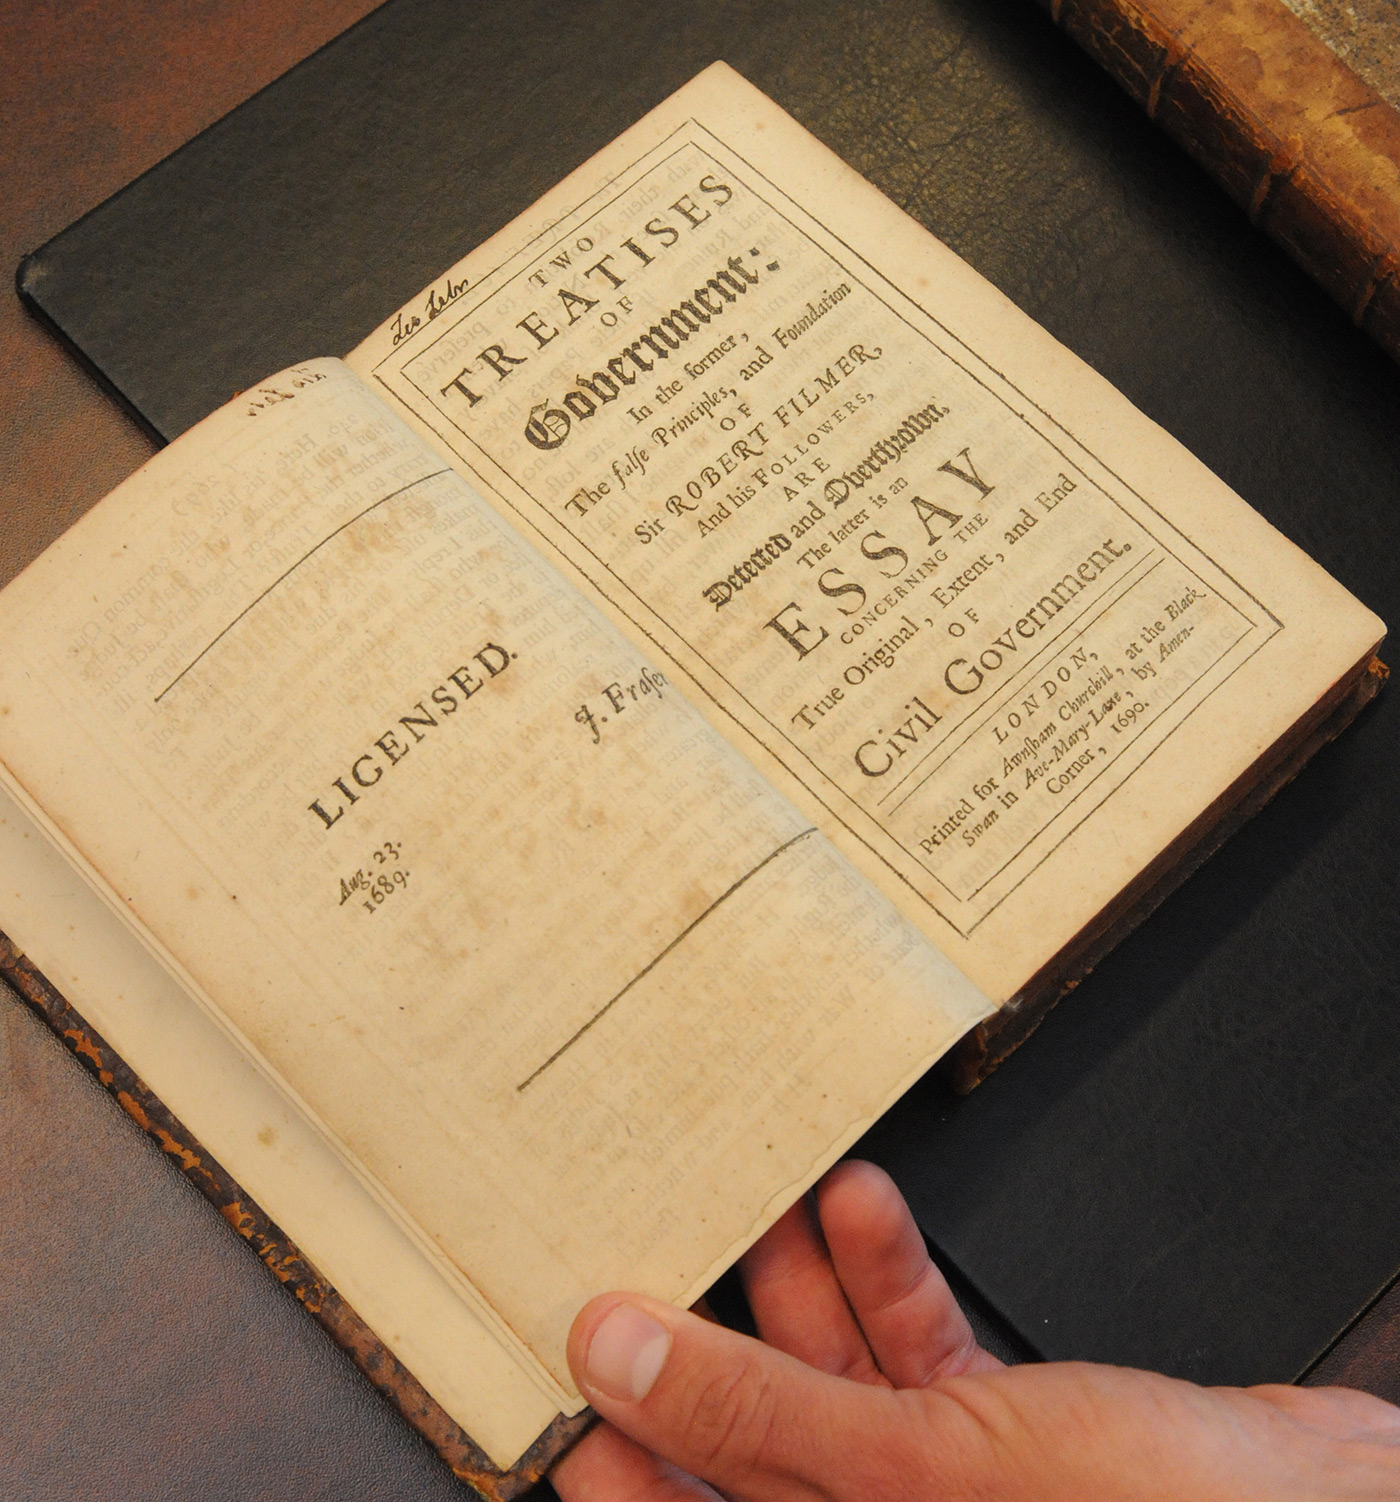 A rare book on display at the 2014 Charles S. Peirce International Centennial Congress.